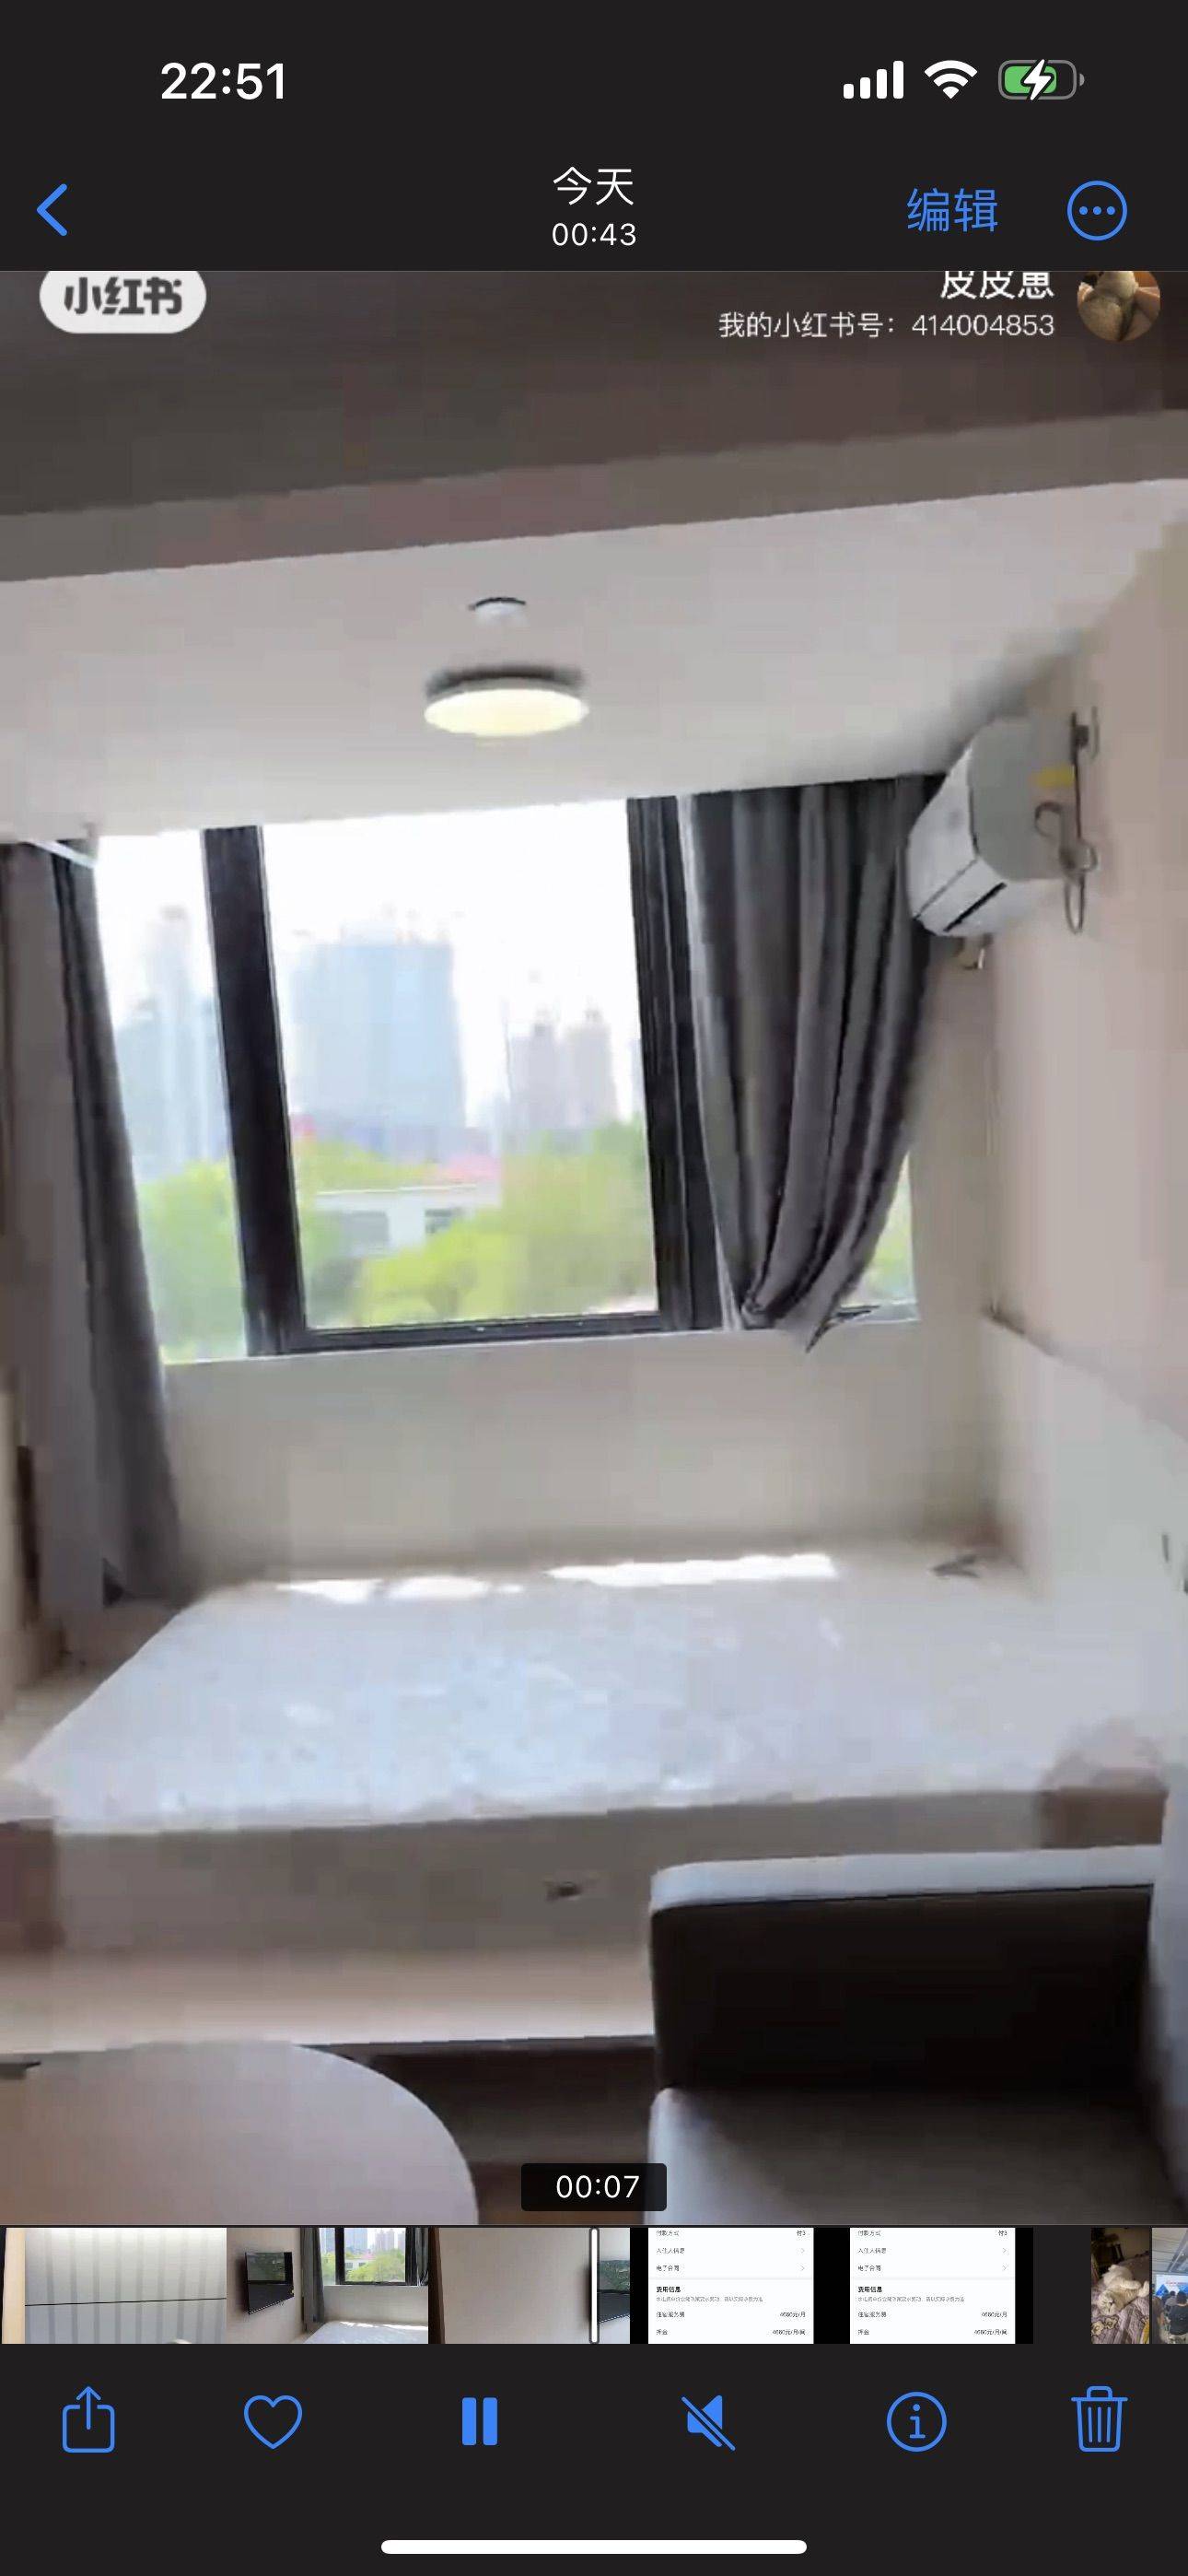 Shanghai-Putuo-Cozy Home,Clean&Comfy,Hustle & Bustle